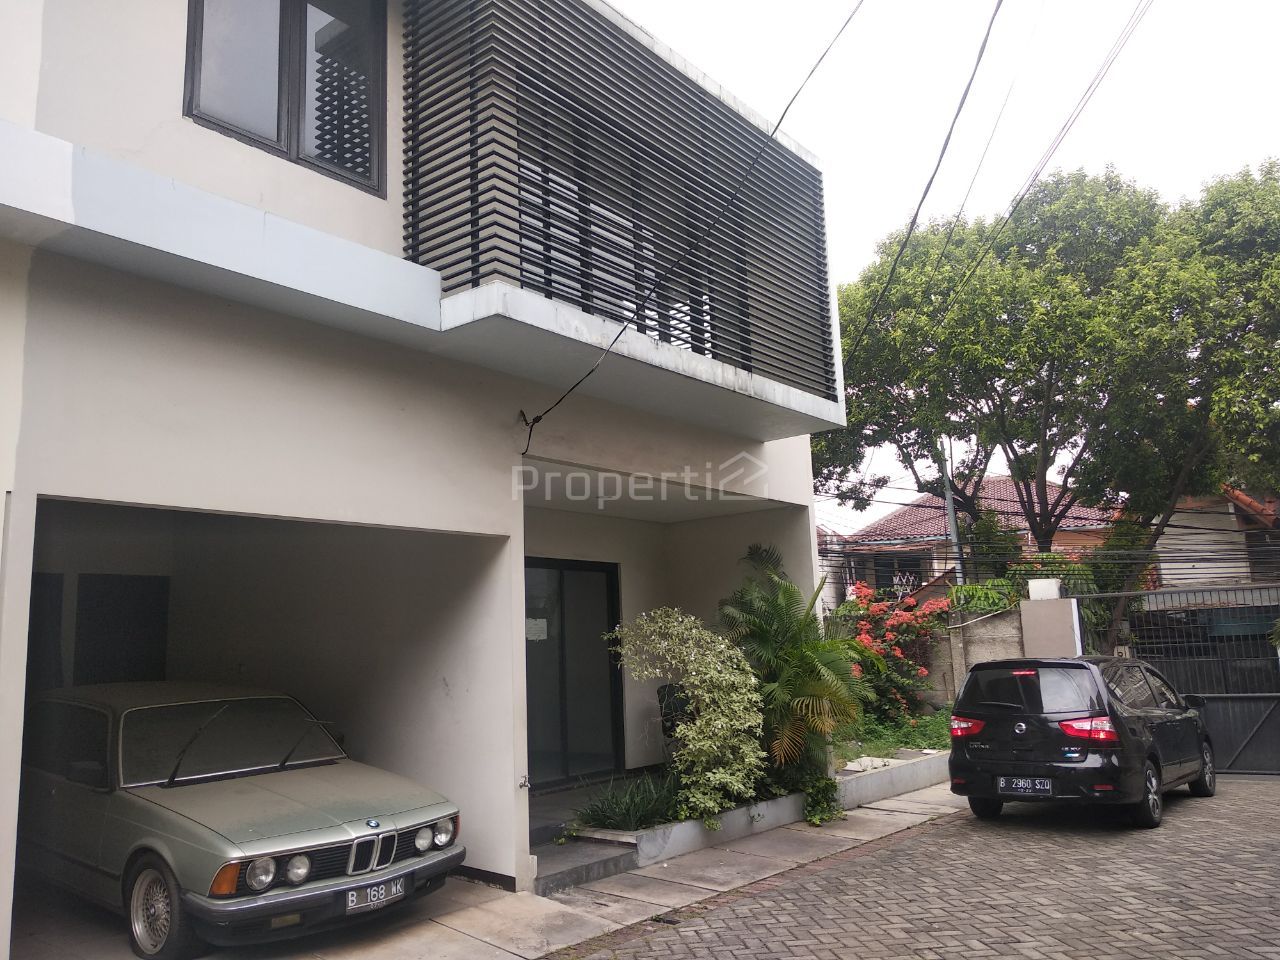 New House in Ps. Manggis, Setiabudi, DKI Jakarta